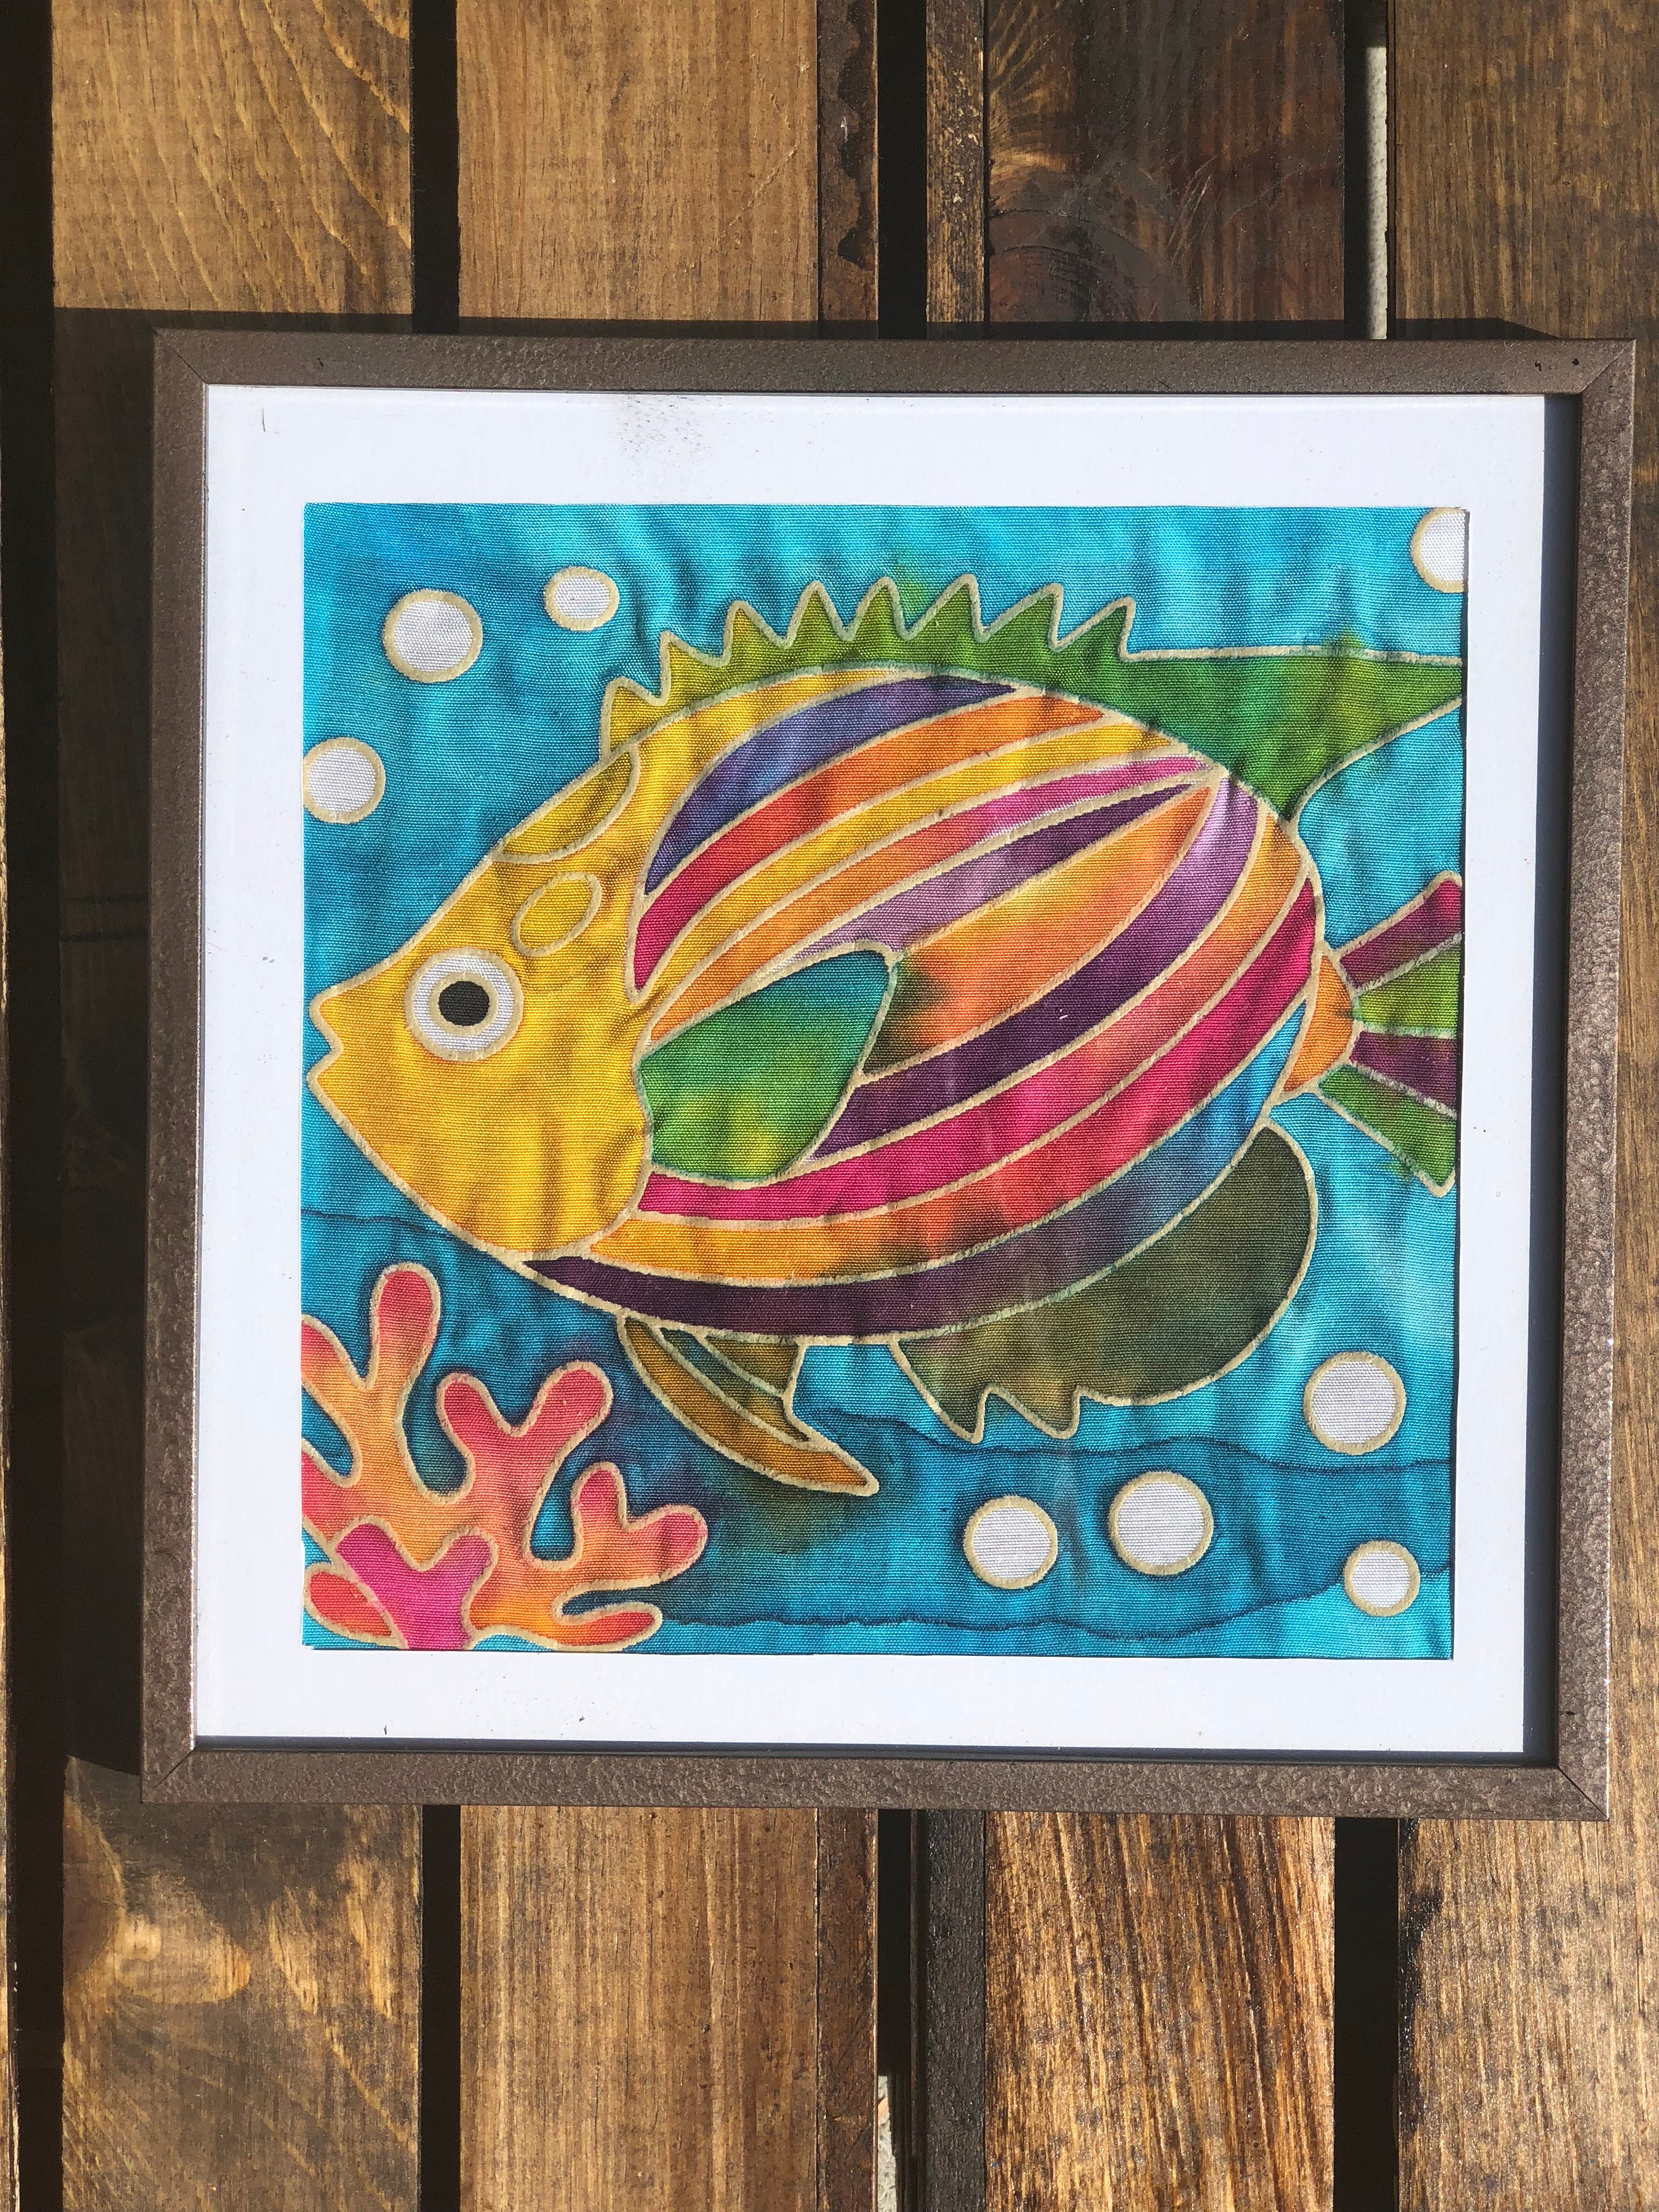 Save the Ocean Batik Fabric Painting Kit - Creative Gift Under $20